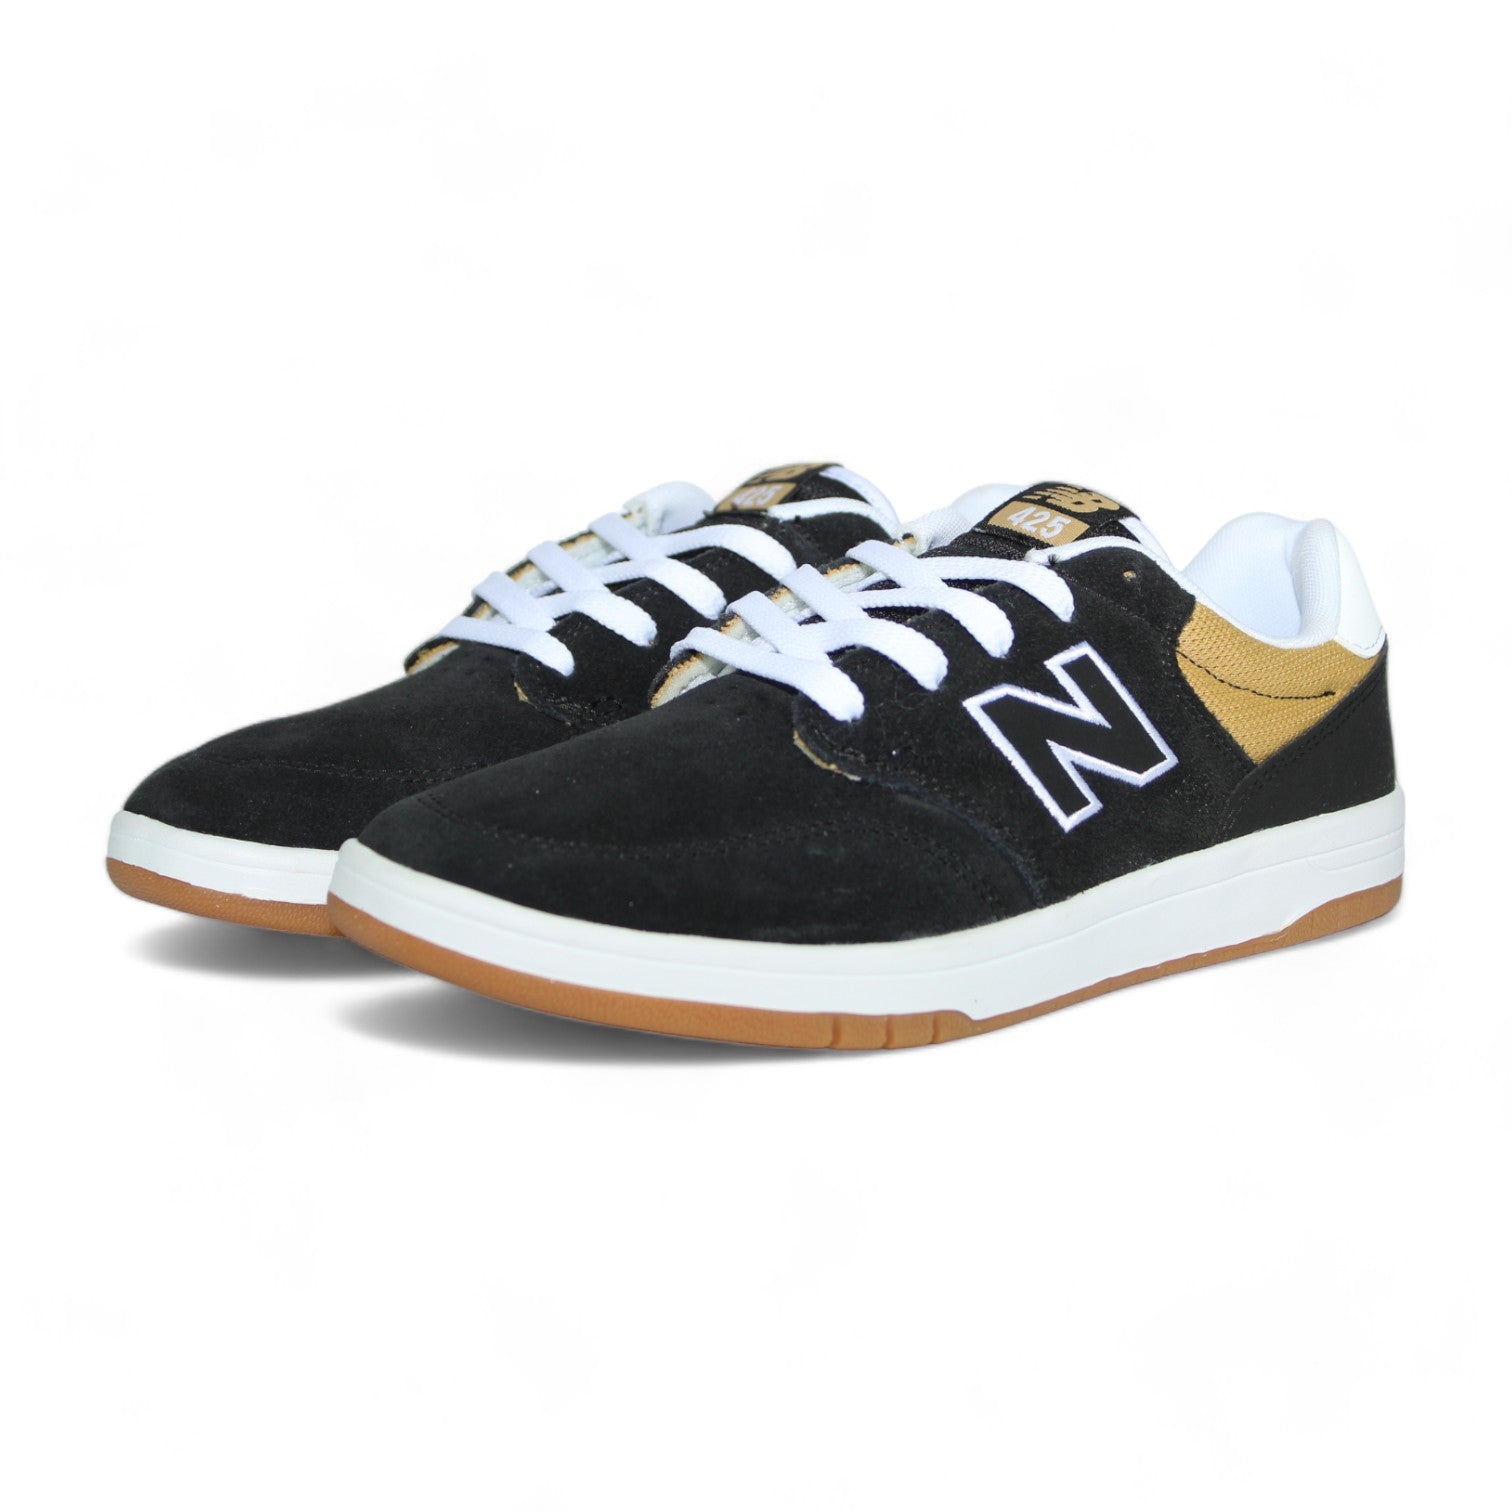 New Balance Numeric NM425BNT Shoes  - Black/White